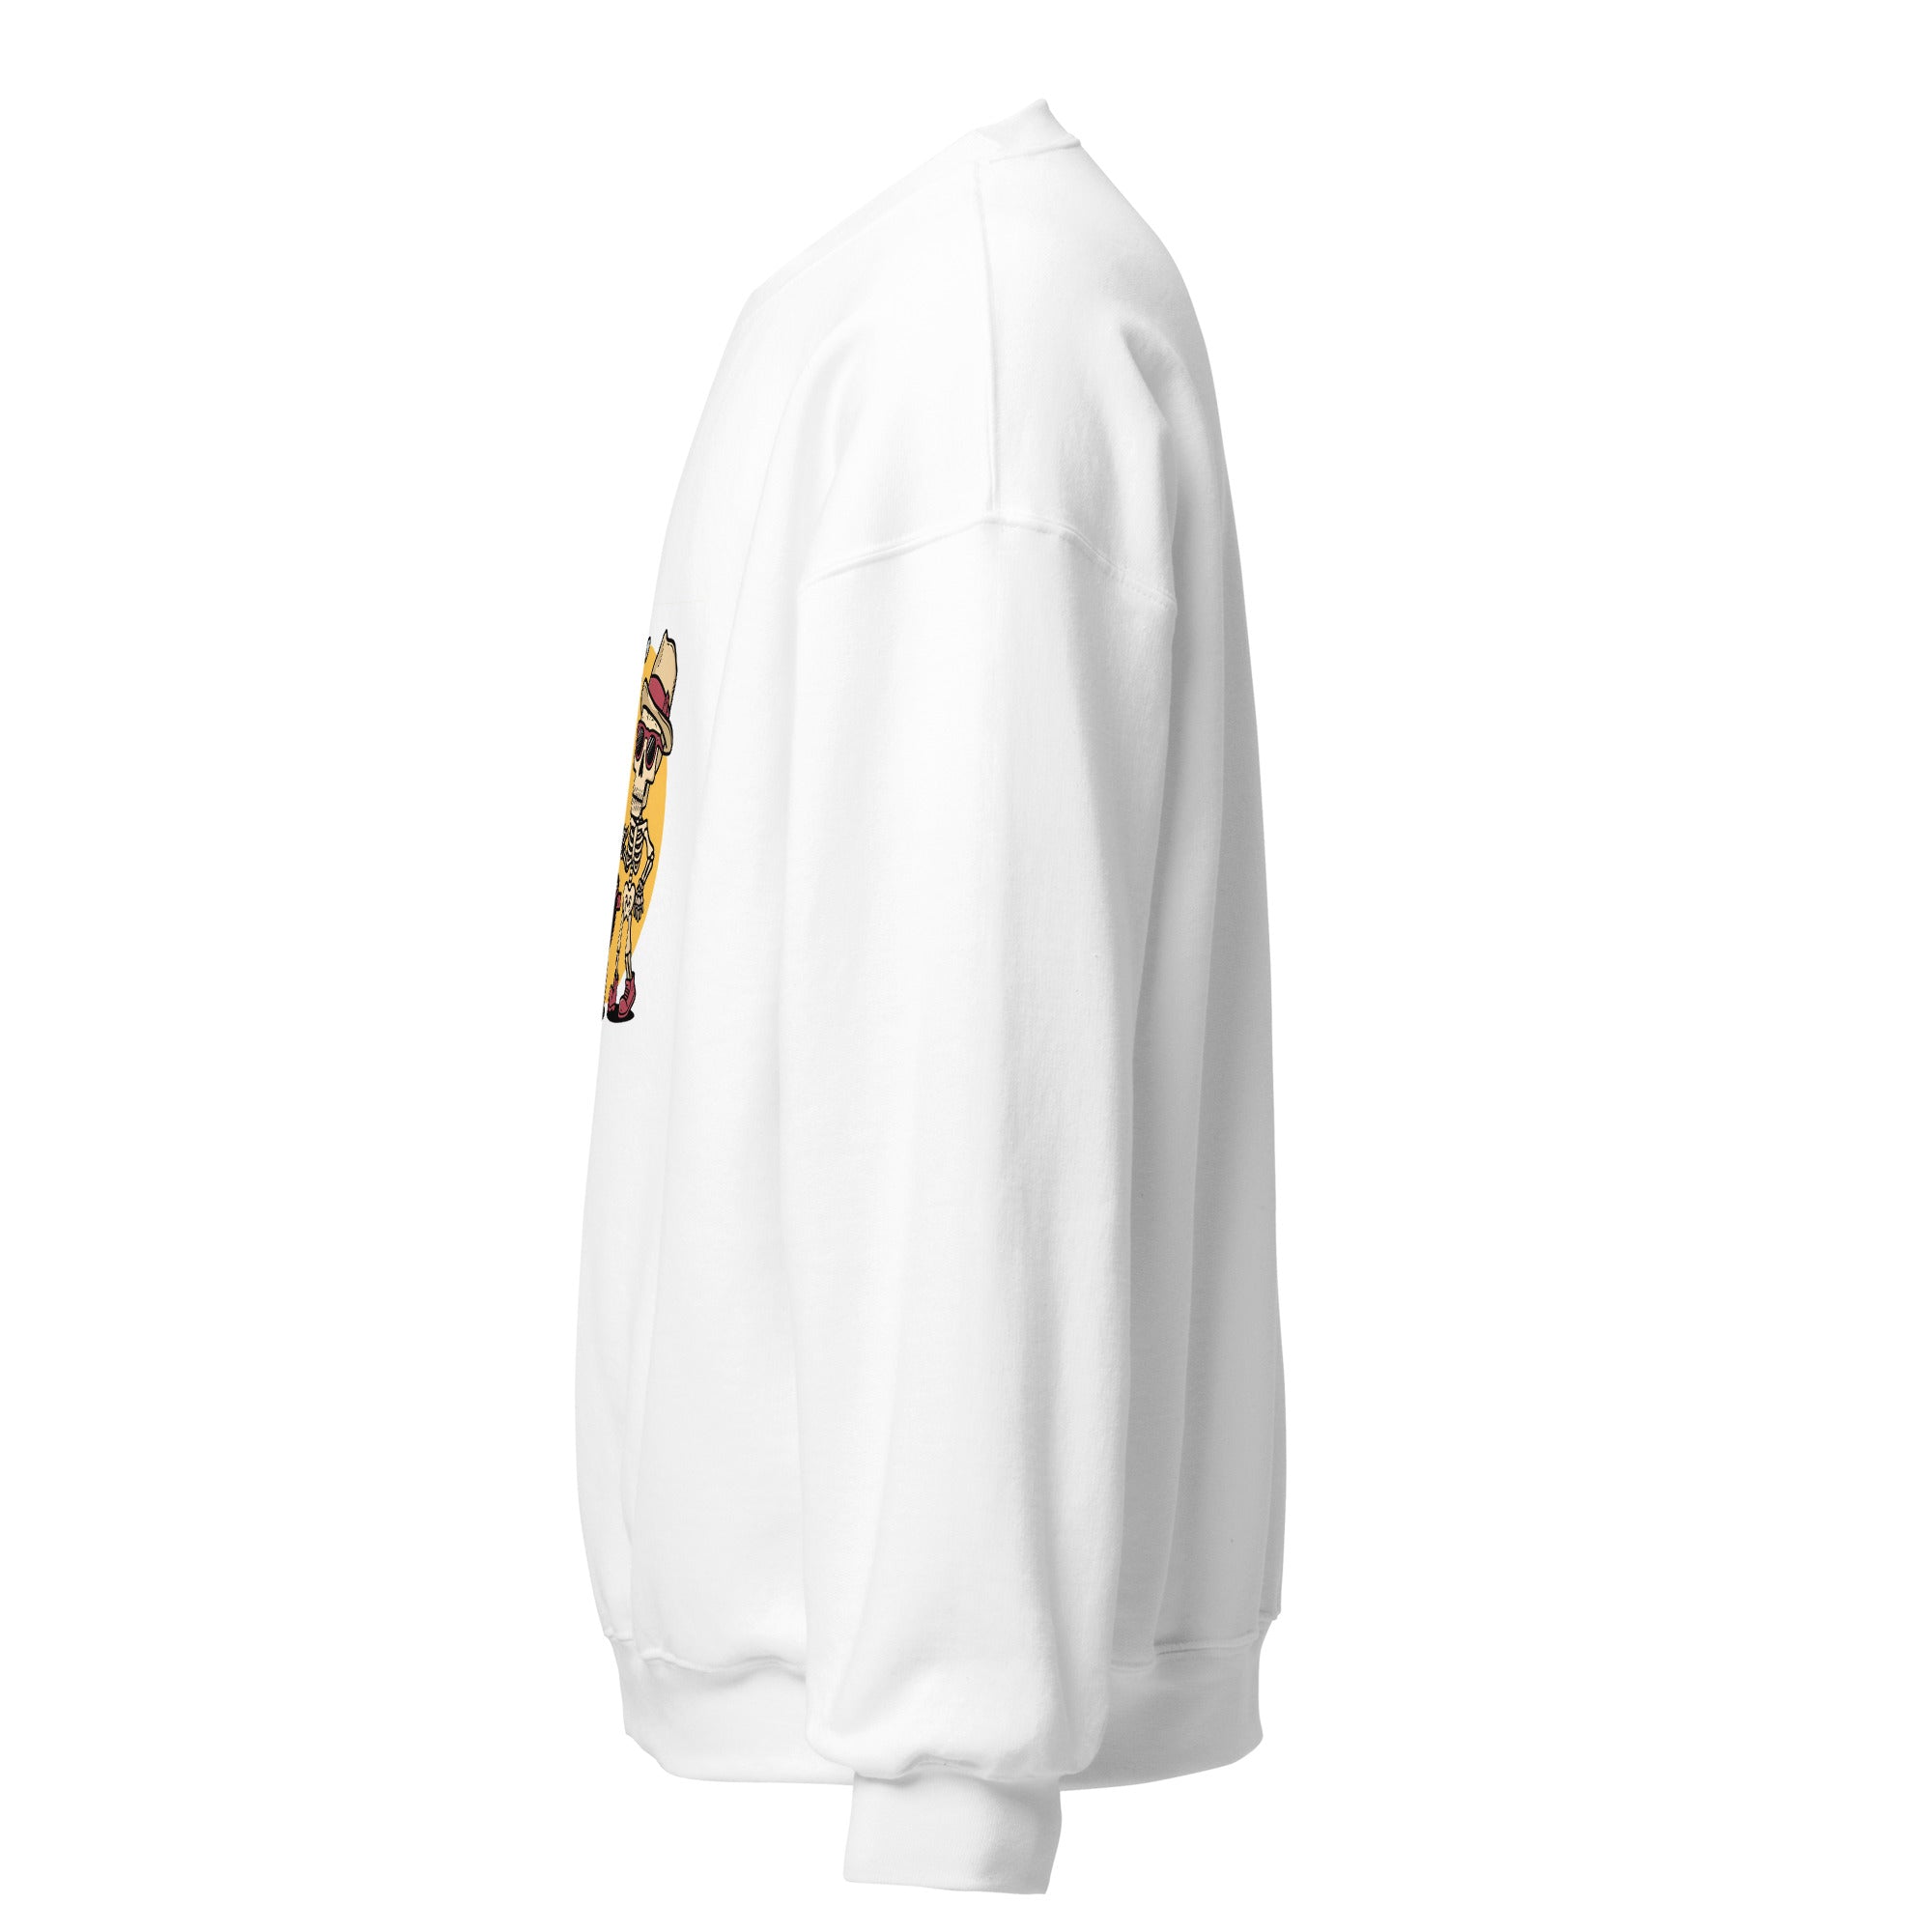 Grillin' N Chillin' Skeleton Halloween Sweatshirt, Unisex